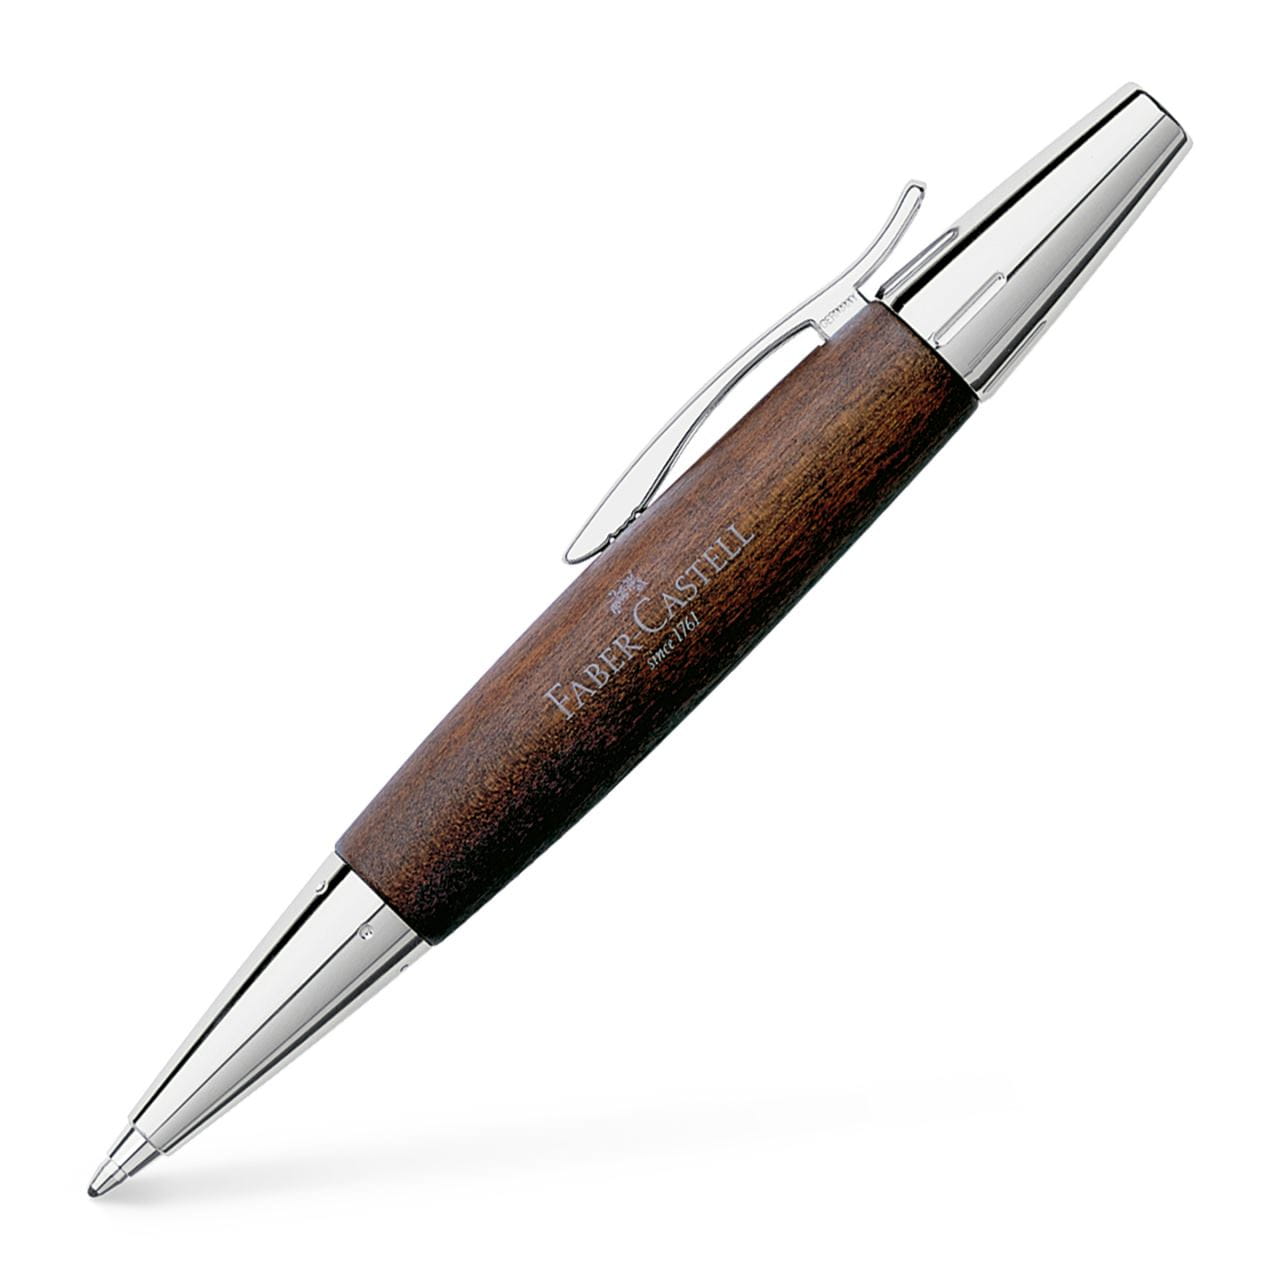 Faber-Castell - 德国辉柏嘉 设计尚品系列 高级旋转式镀铬梨木圆珠笔 深褐色